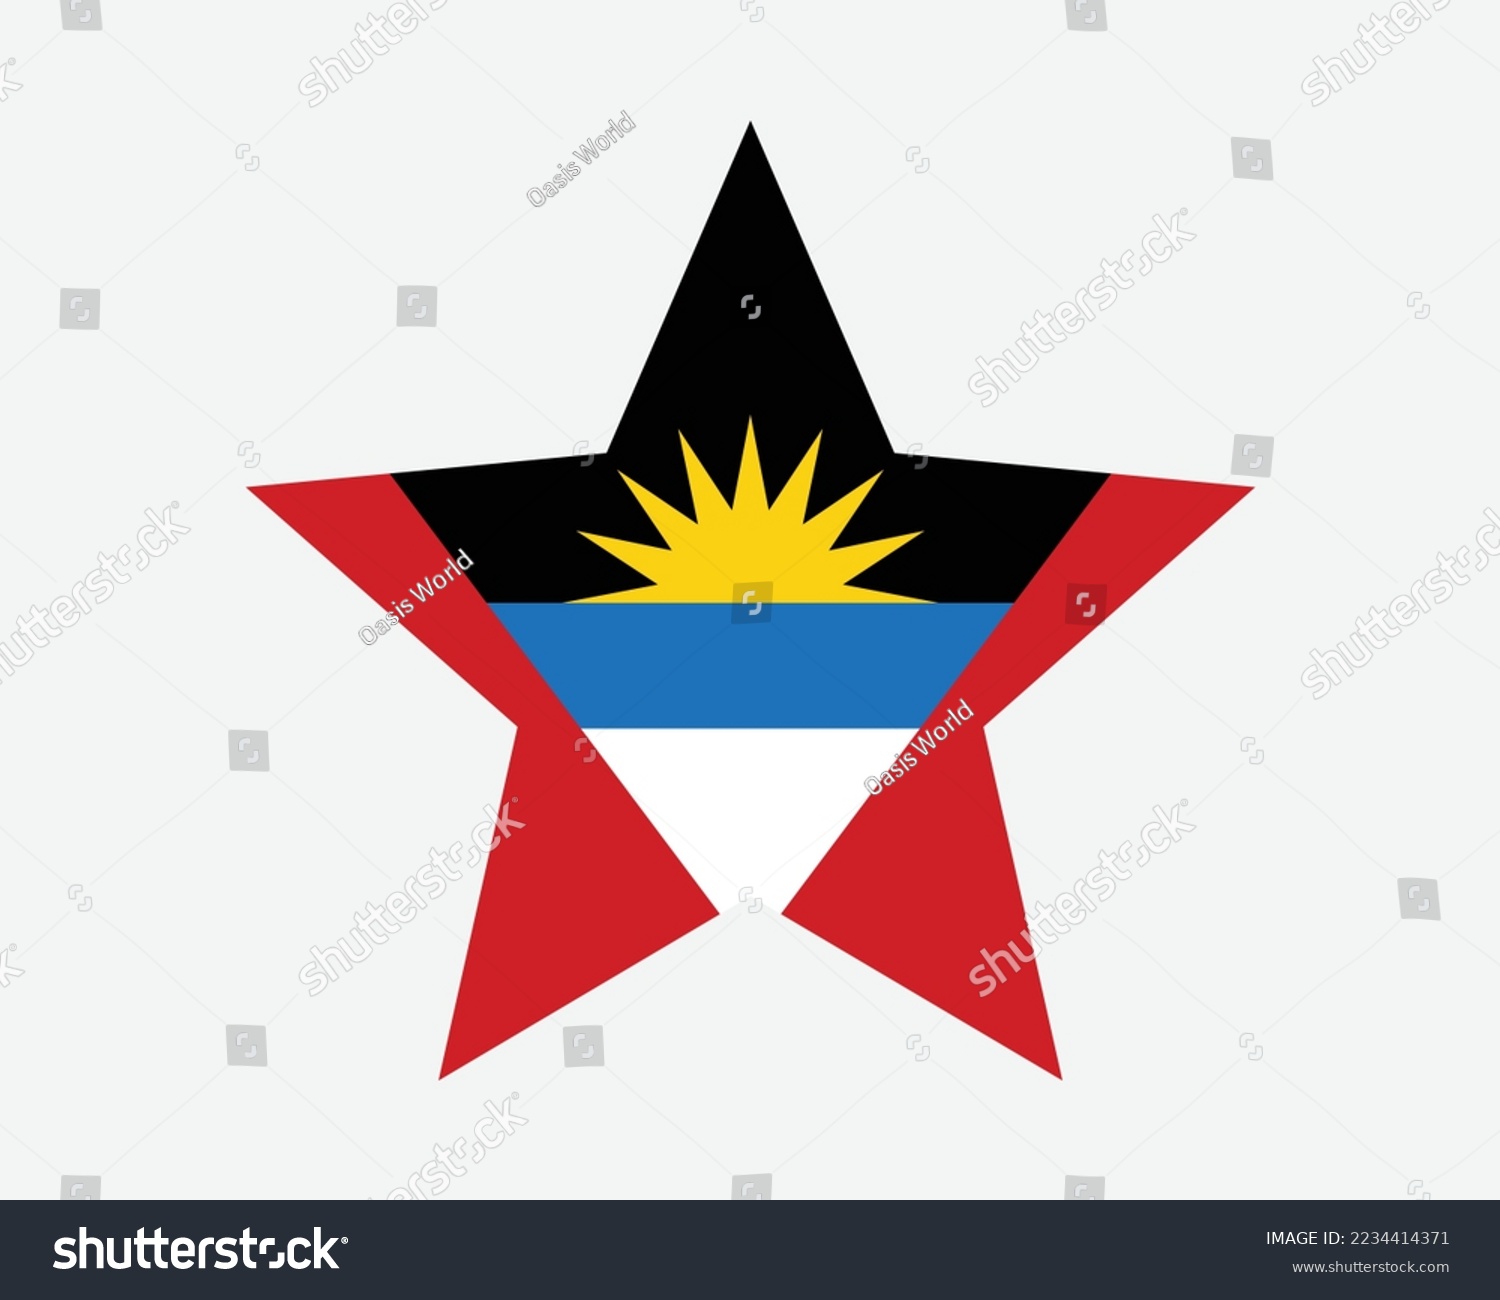 SVG of Antigua and Barbuda Star Flag. Antiguan and Barbudan Star Shape Flag. Country National Banner Icon Symbol Vector 2D Flat Artwork Graphic Illustration svg